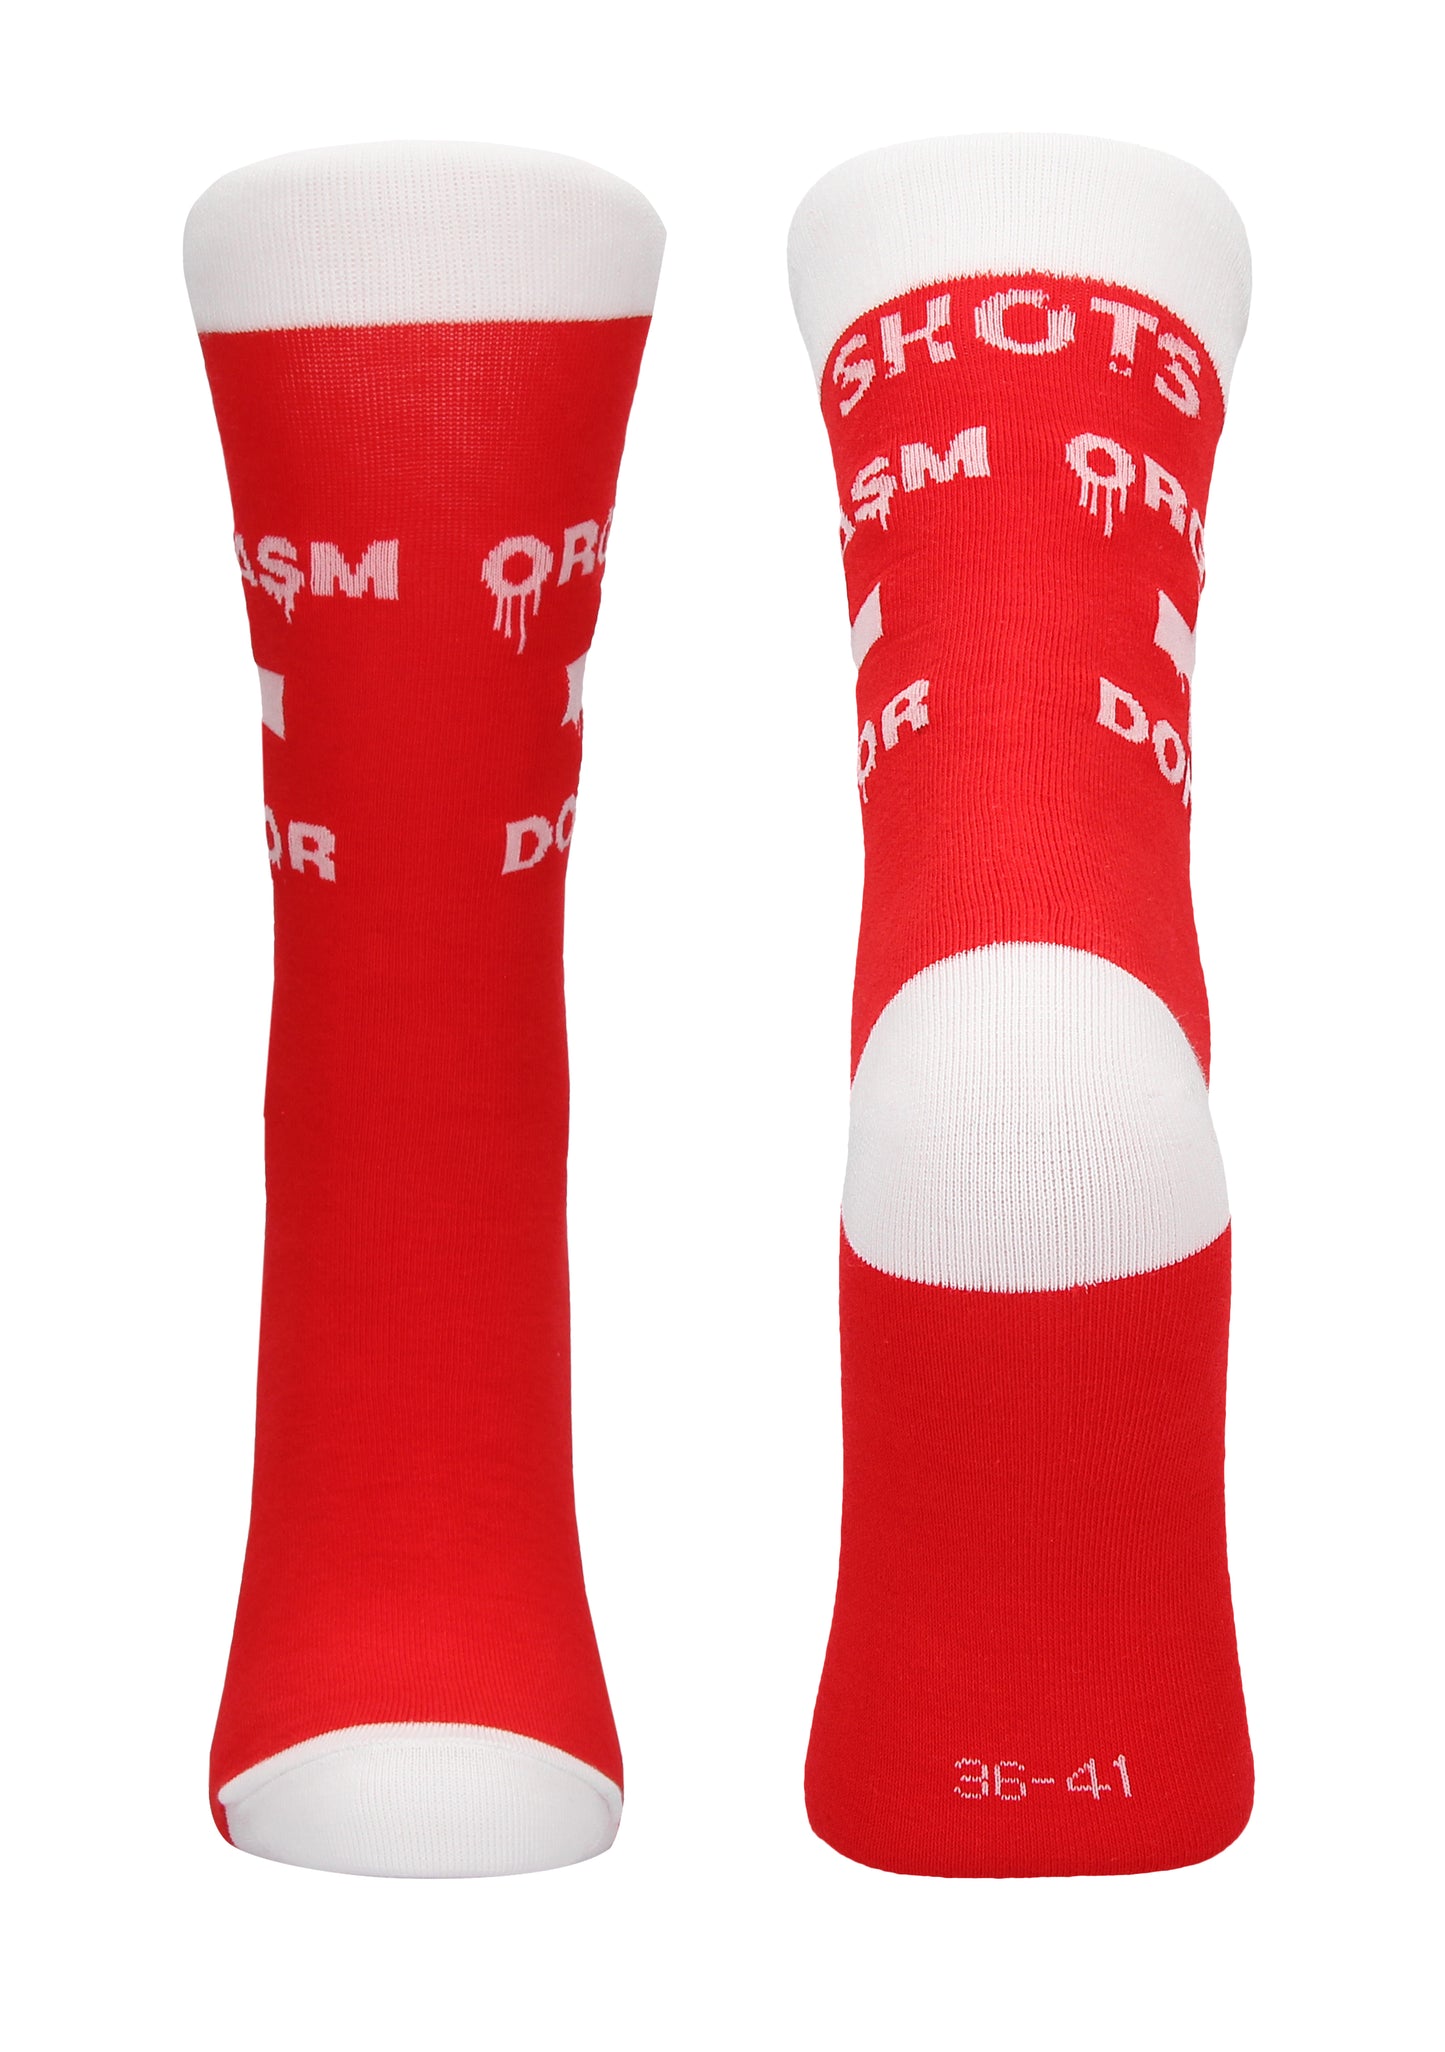 Sexy Socks - Orgasm Donor Sokken